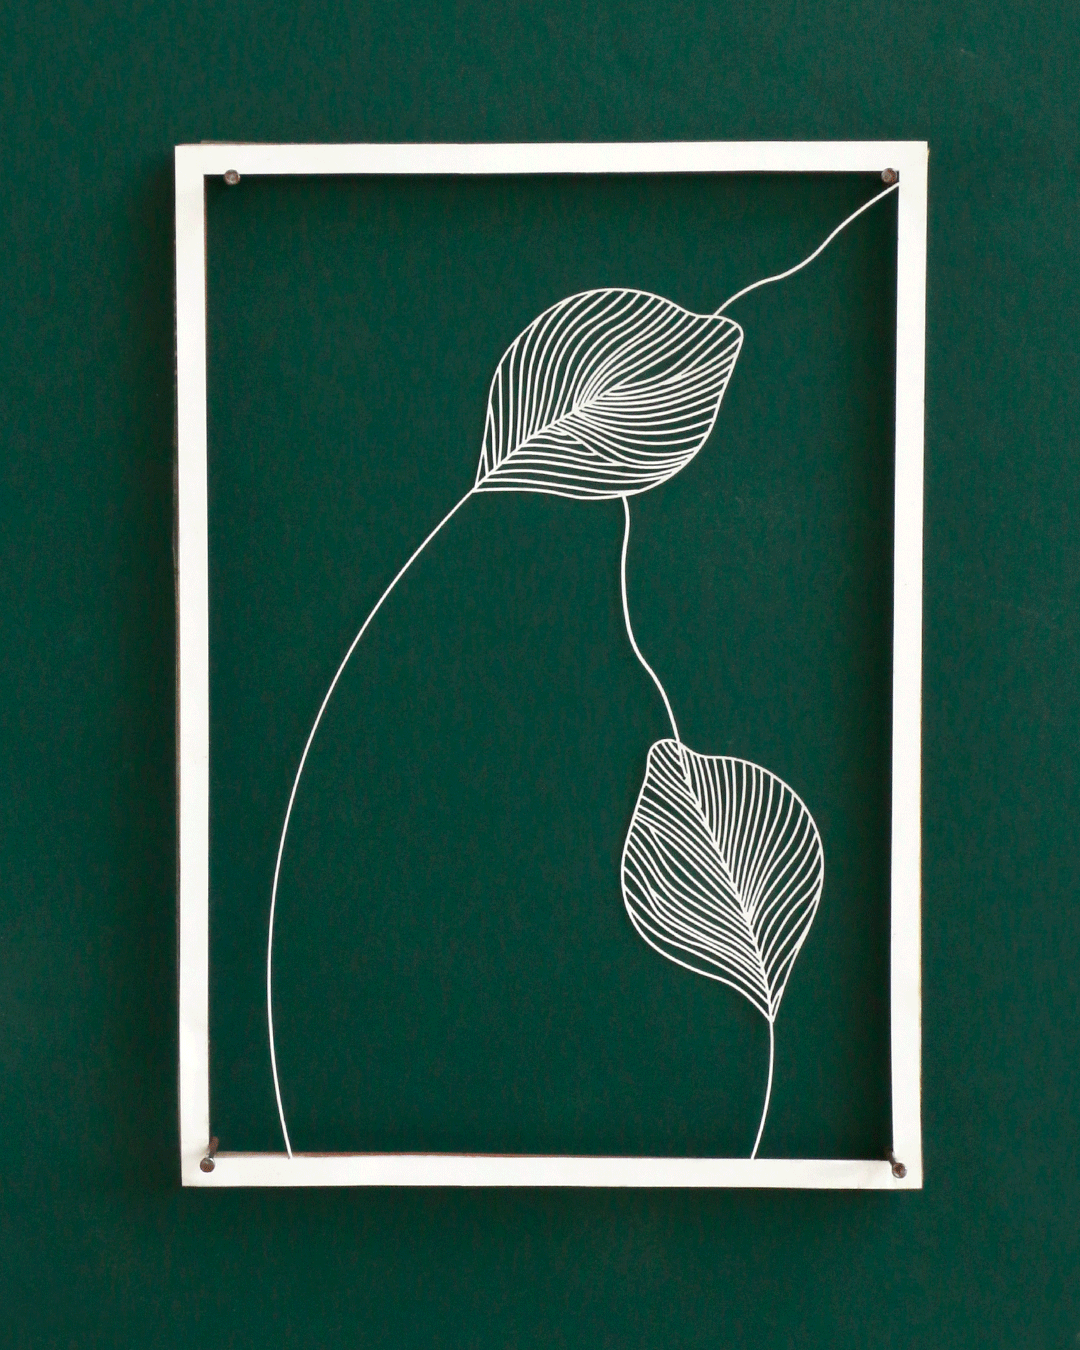 feather handmade paper paper art paper artwork paper cut paper cut out Paper cutting papercuts peacock